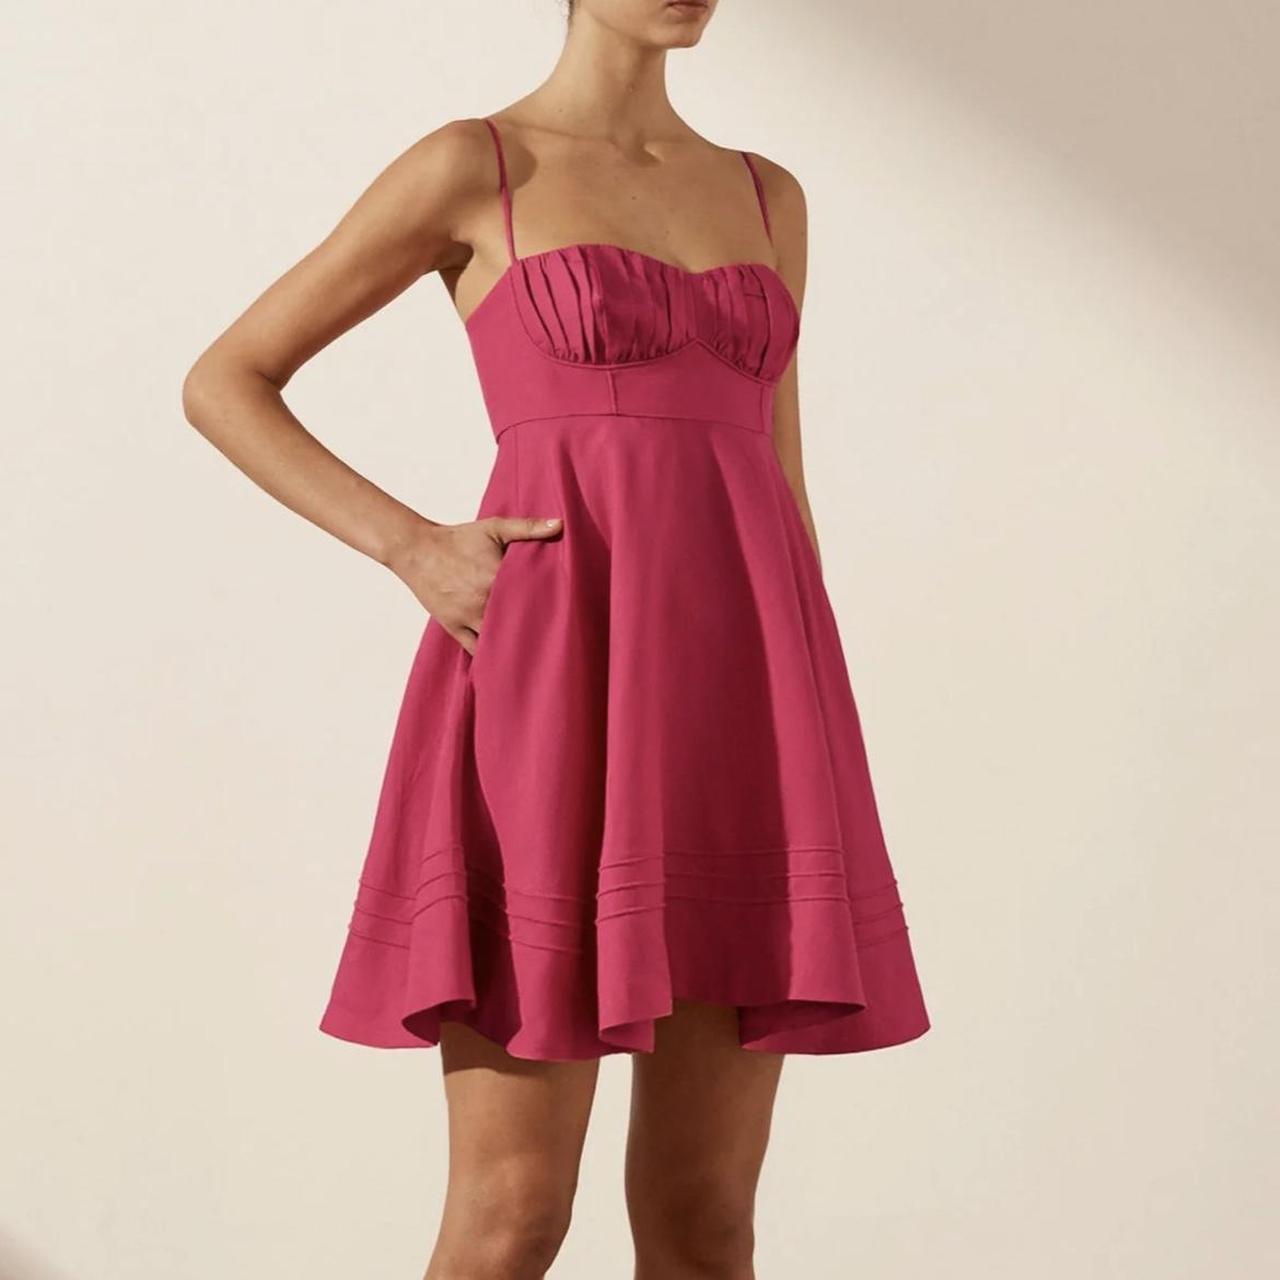 Shona Joy - Hot pink mini dress Size 6 - Never... - Depop